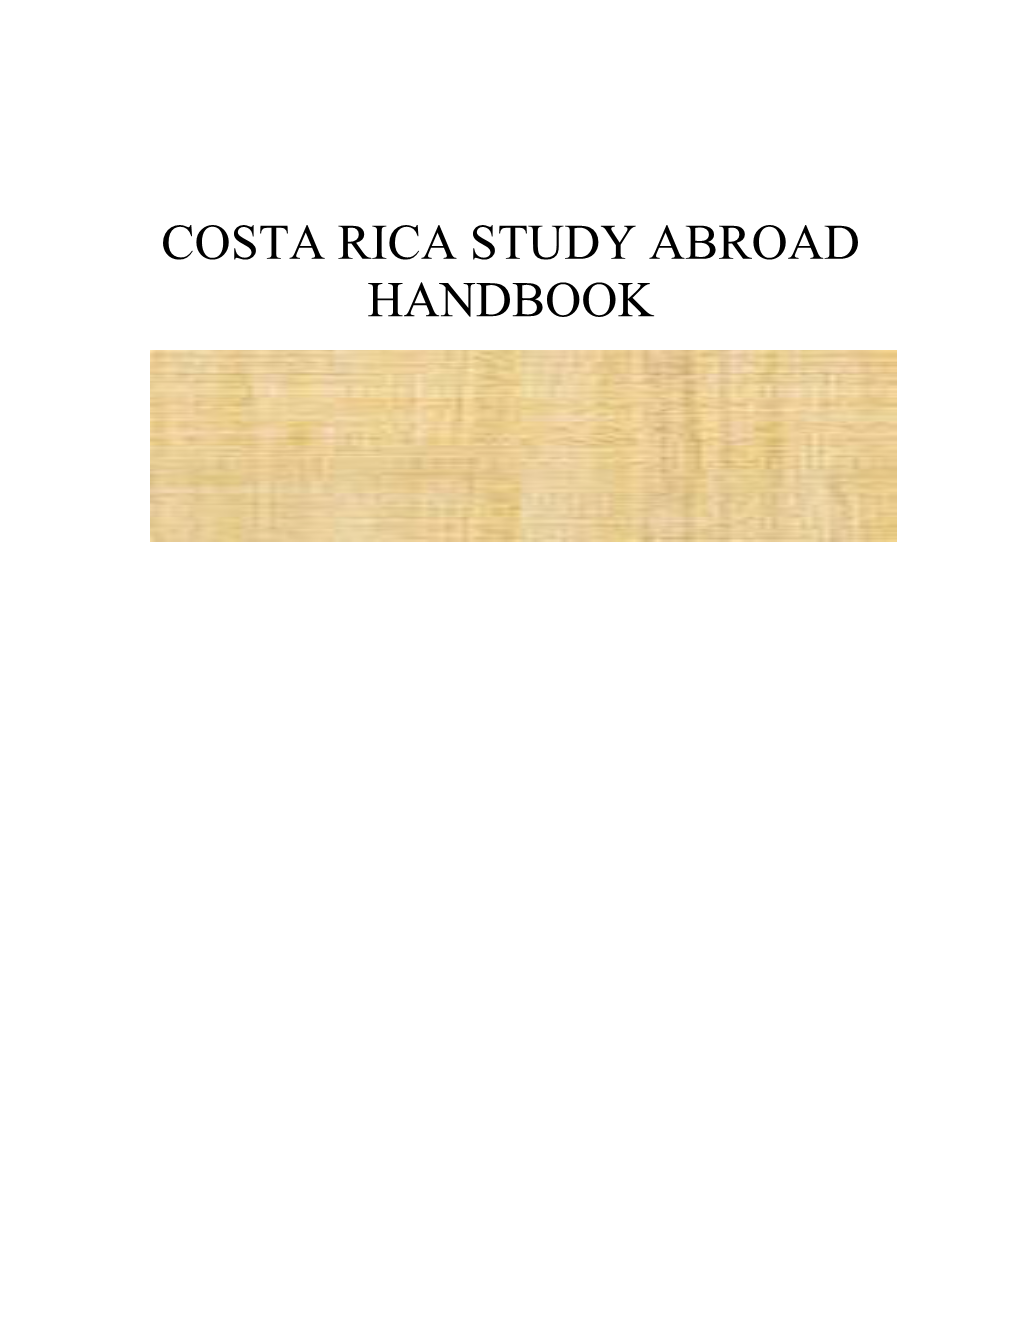 Costa Rica Study Abroad Handbook